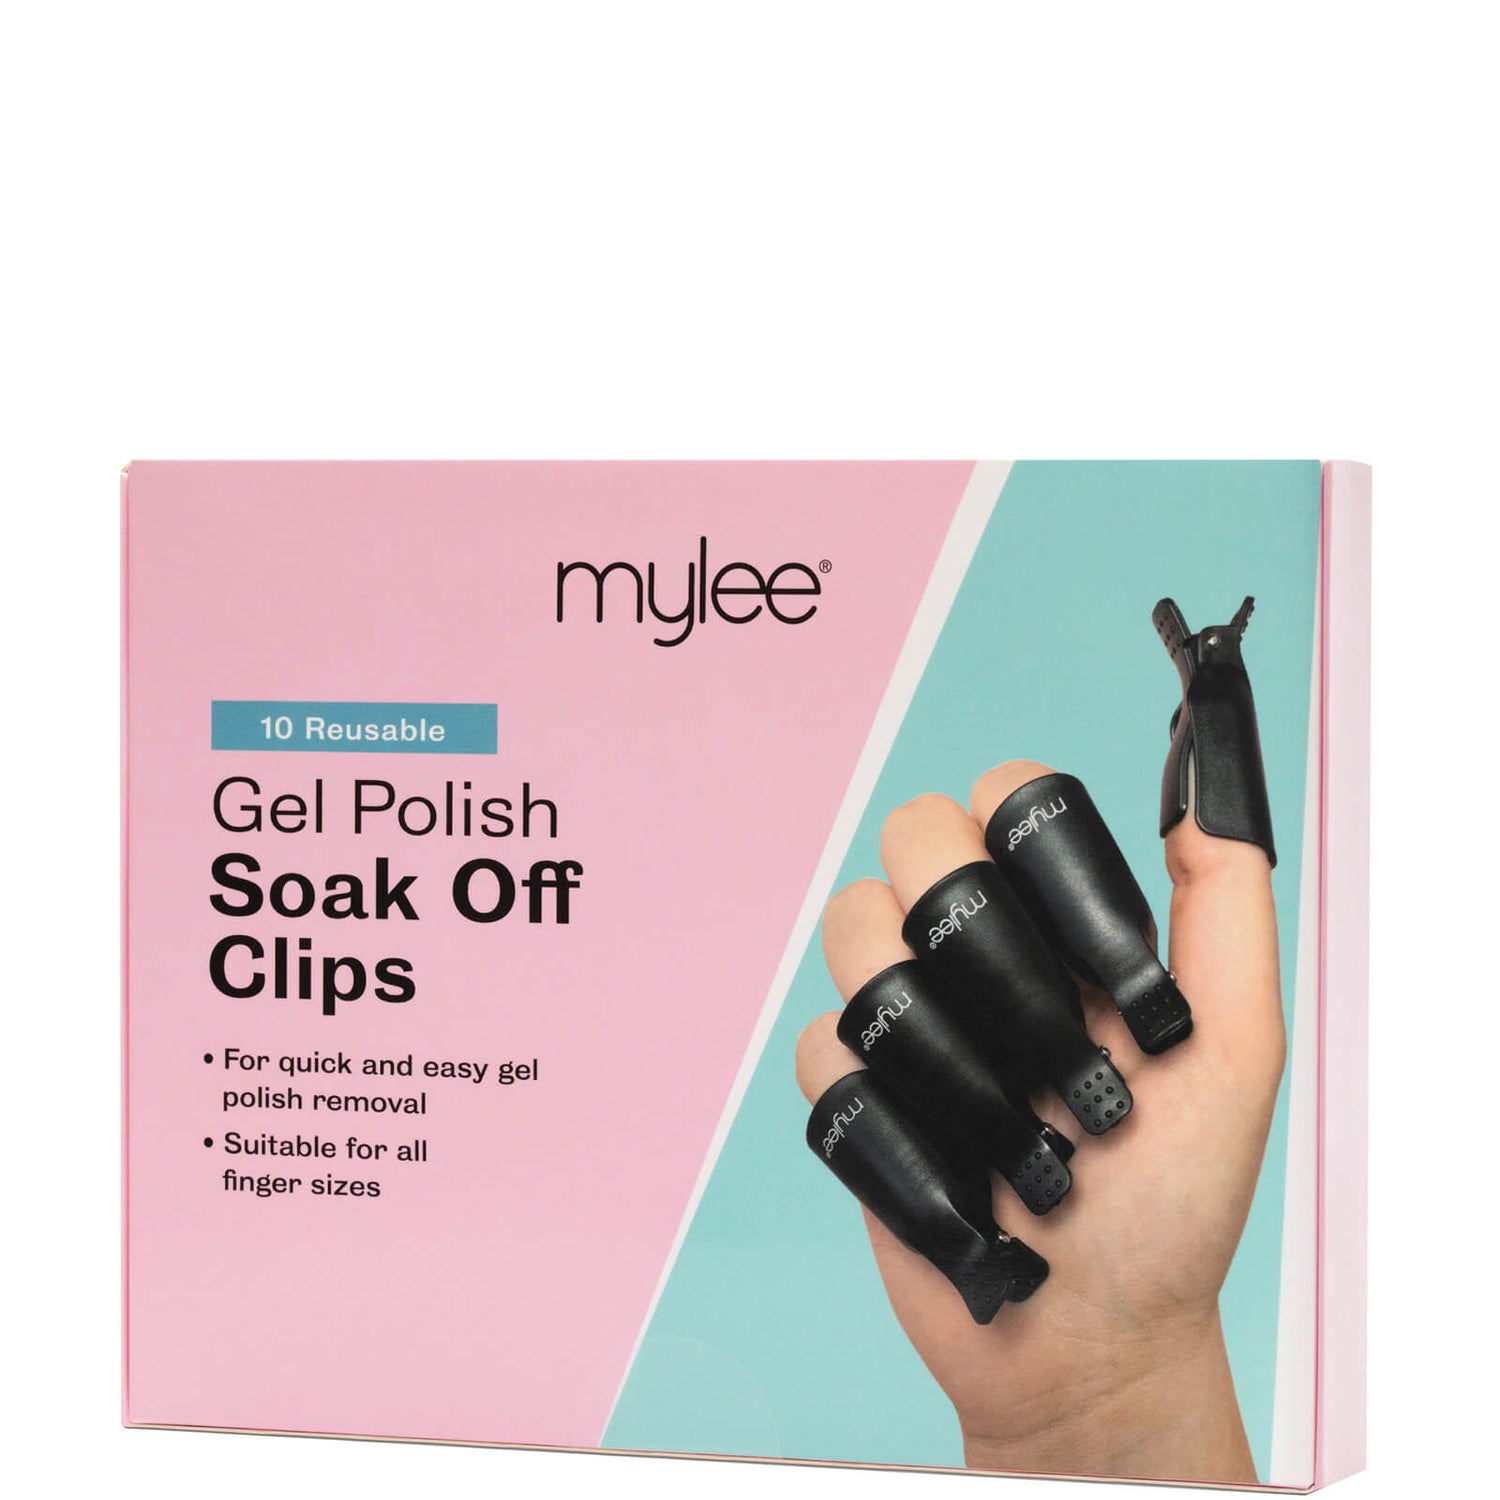 Mylee Gel Polish Soak Off Clips